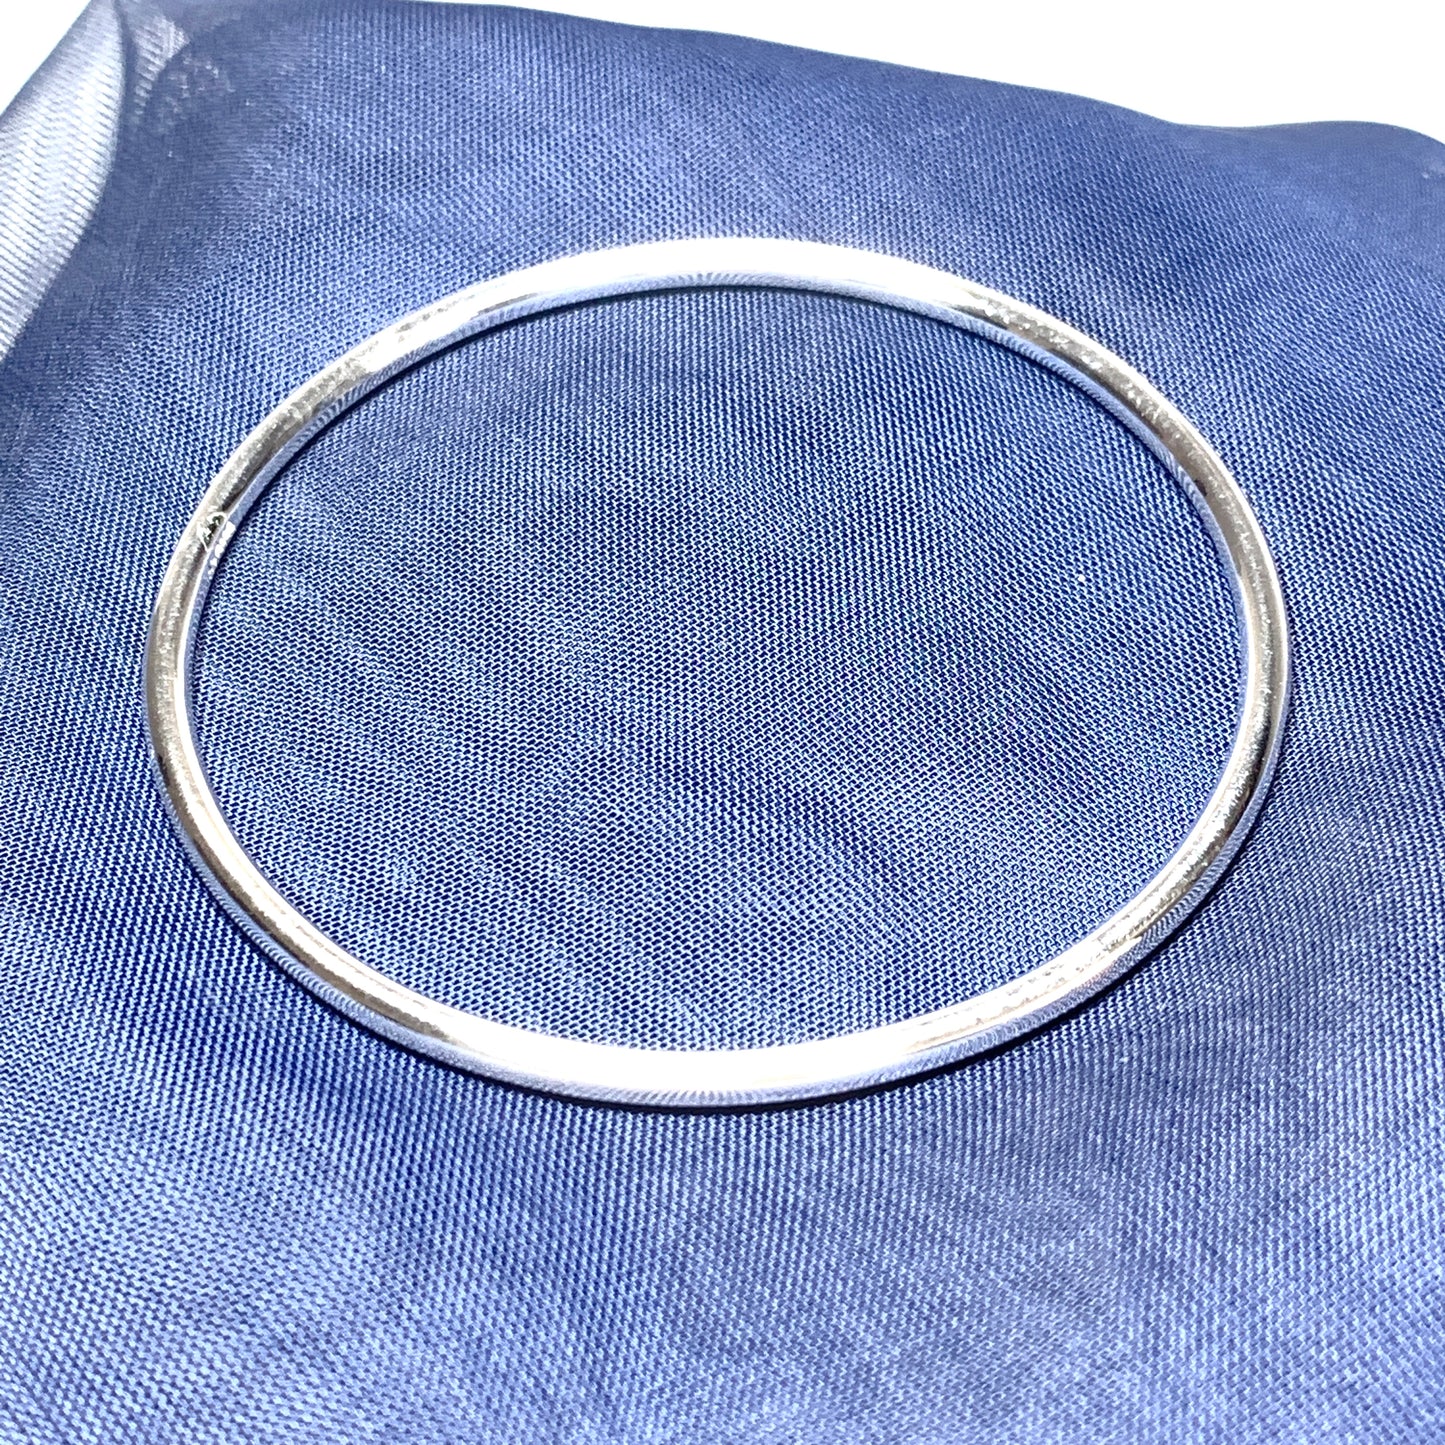 Round solid bangle 3 mm round plain sterling silver polished slave bangle